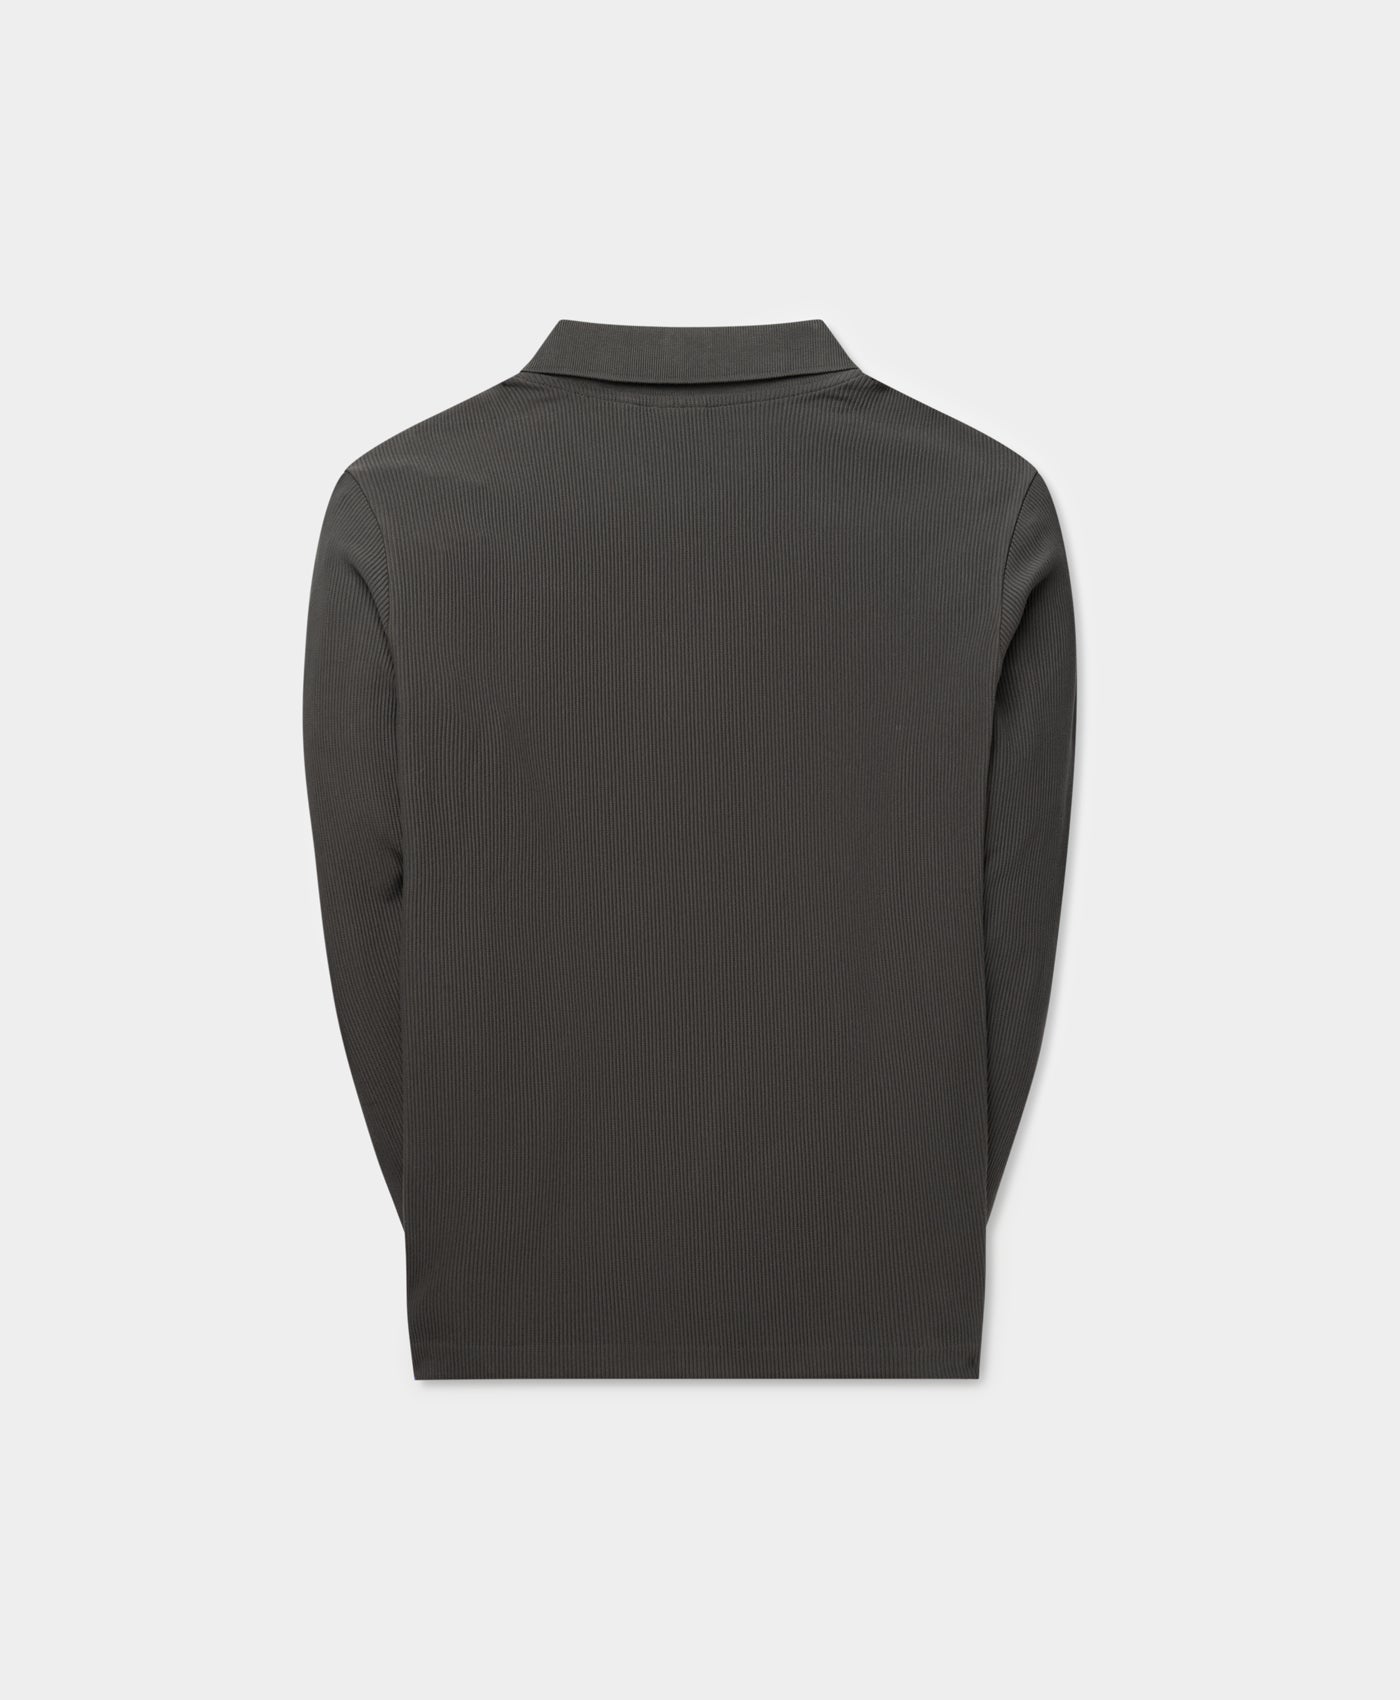 DP - Ash Grey Parram LS Shirt - Packshot - Rear